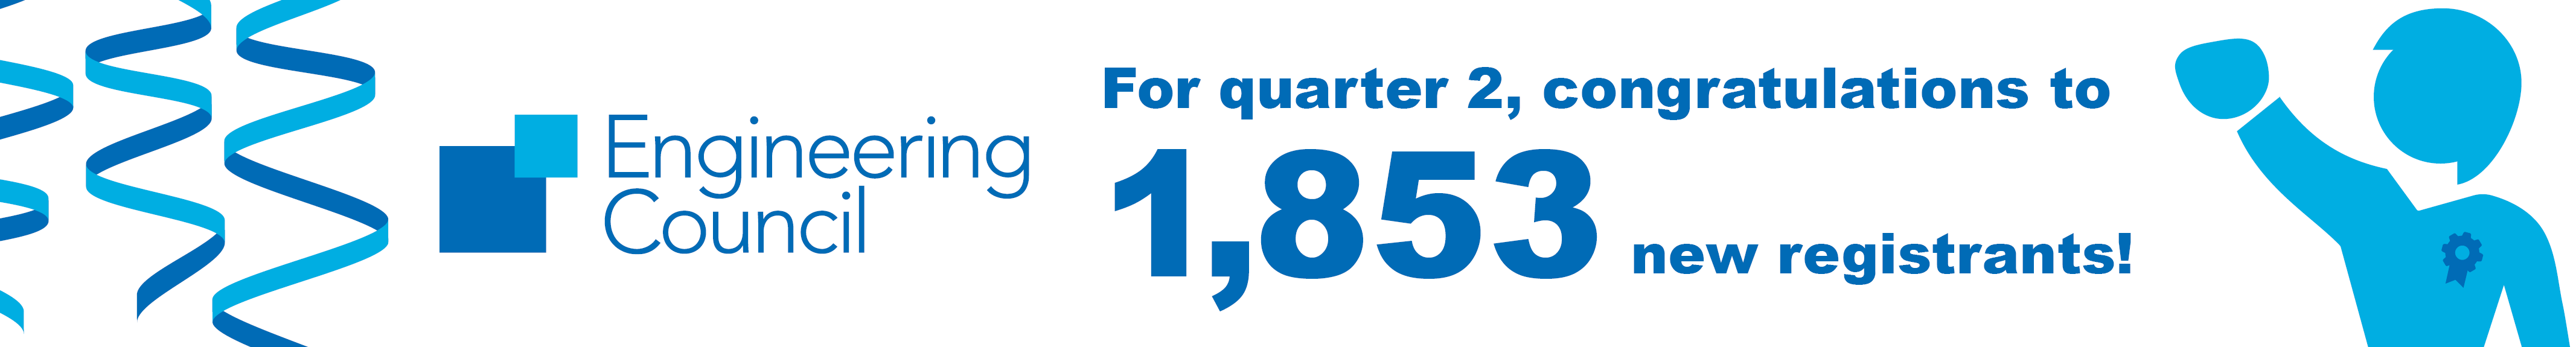 Text reads "For quarter 2, congratulations to 1,853 new registrants!"